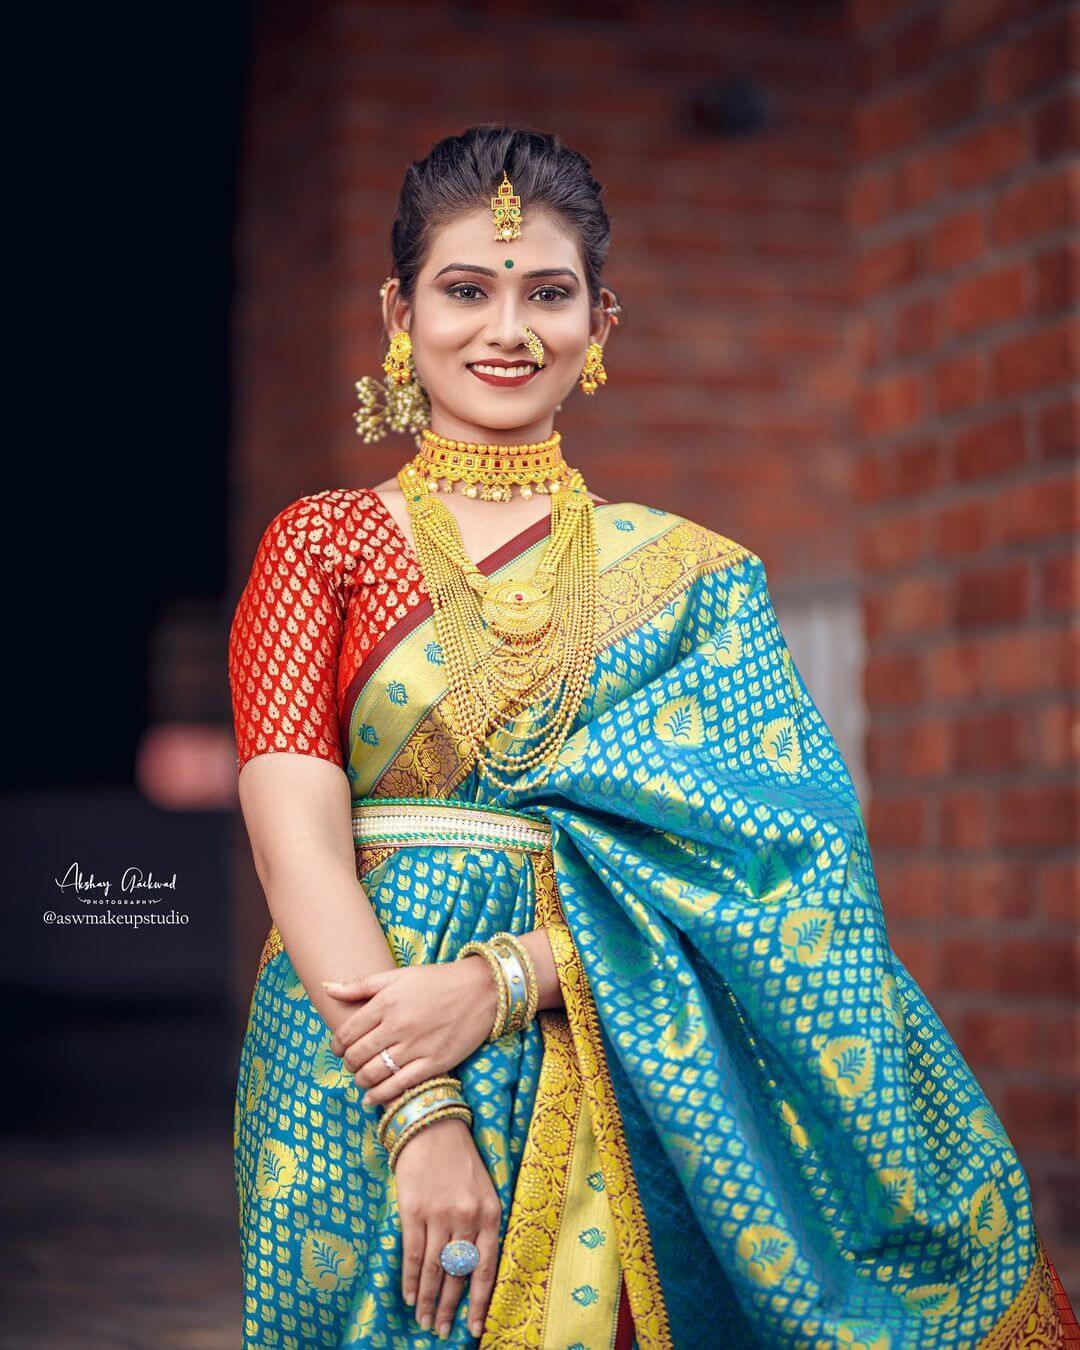 Vibrant Gold Jewellery For Maharashtrian Bride